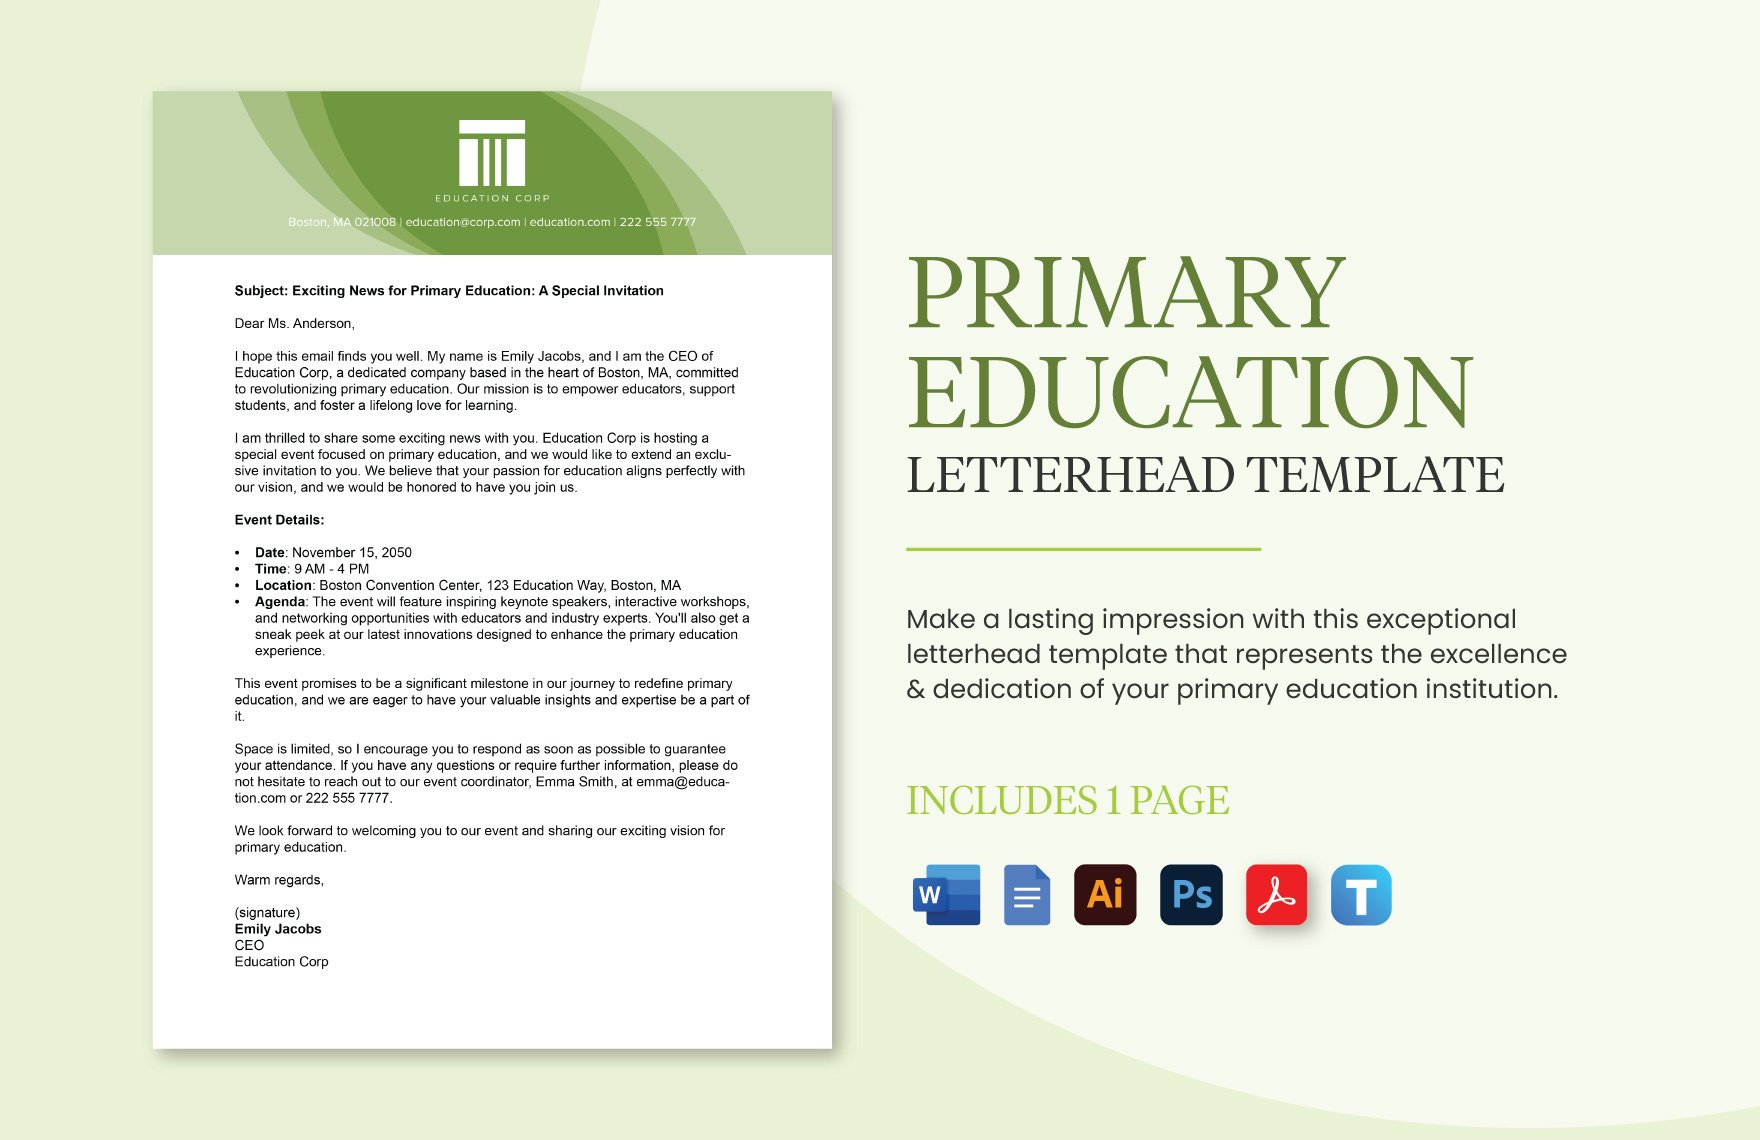 Primary Education Letterhead Template in Word, Google Docs, PDF, Illustrator, PSD